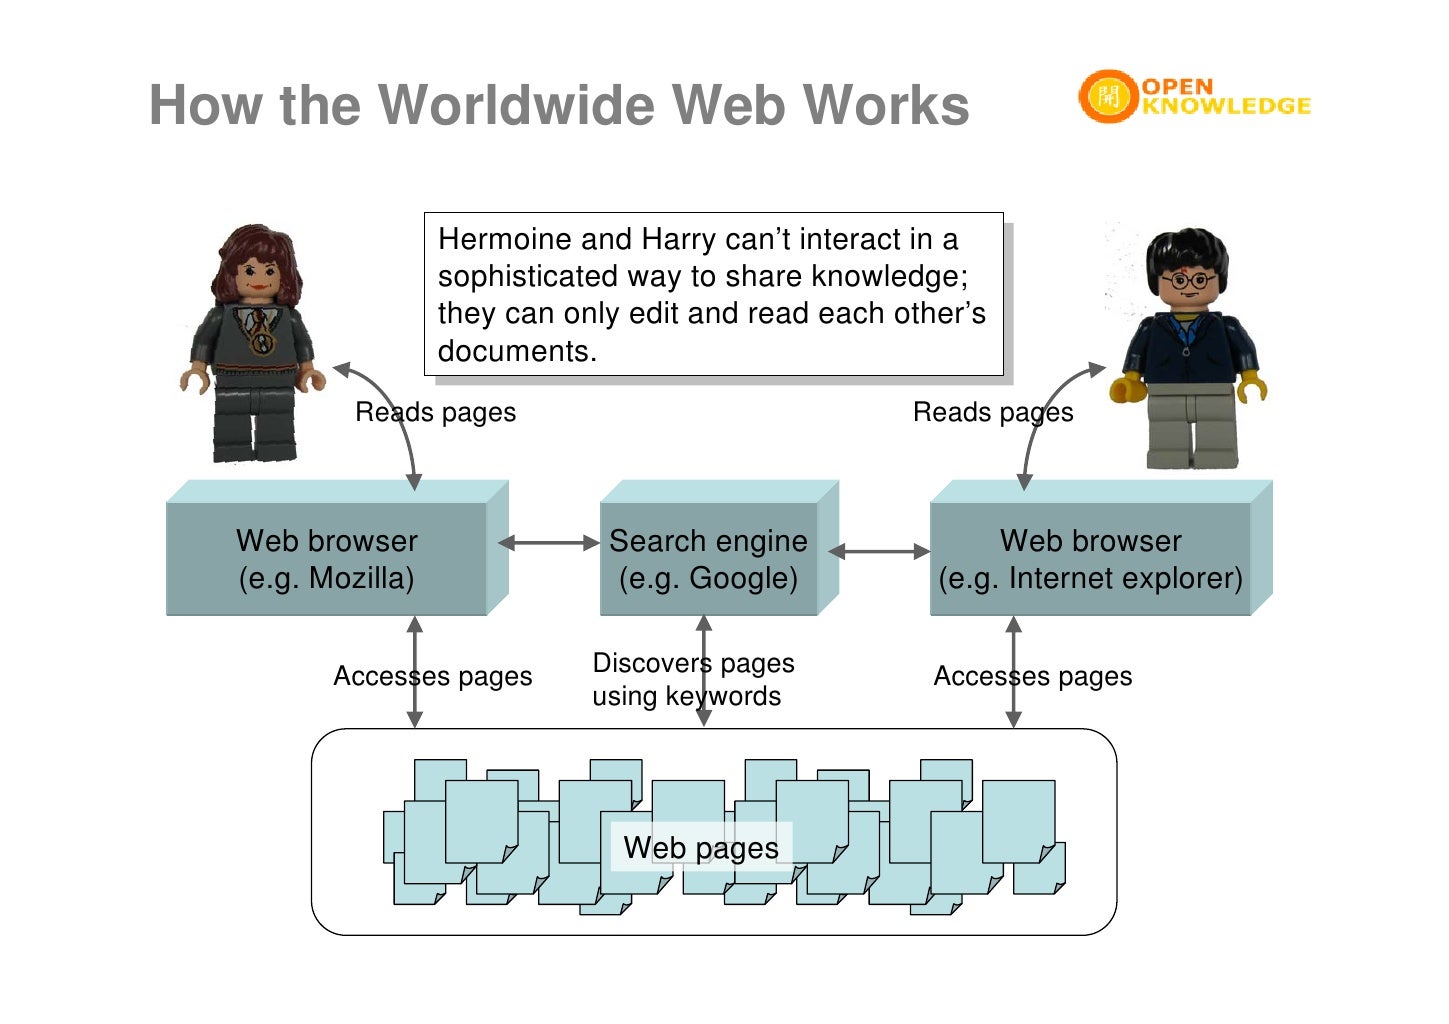 world wide web assignment